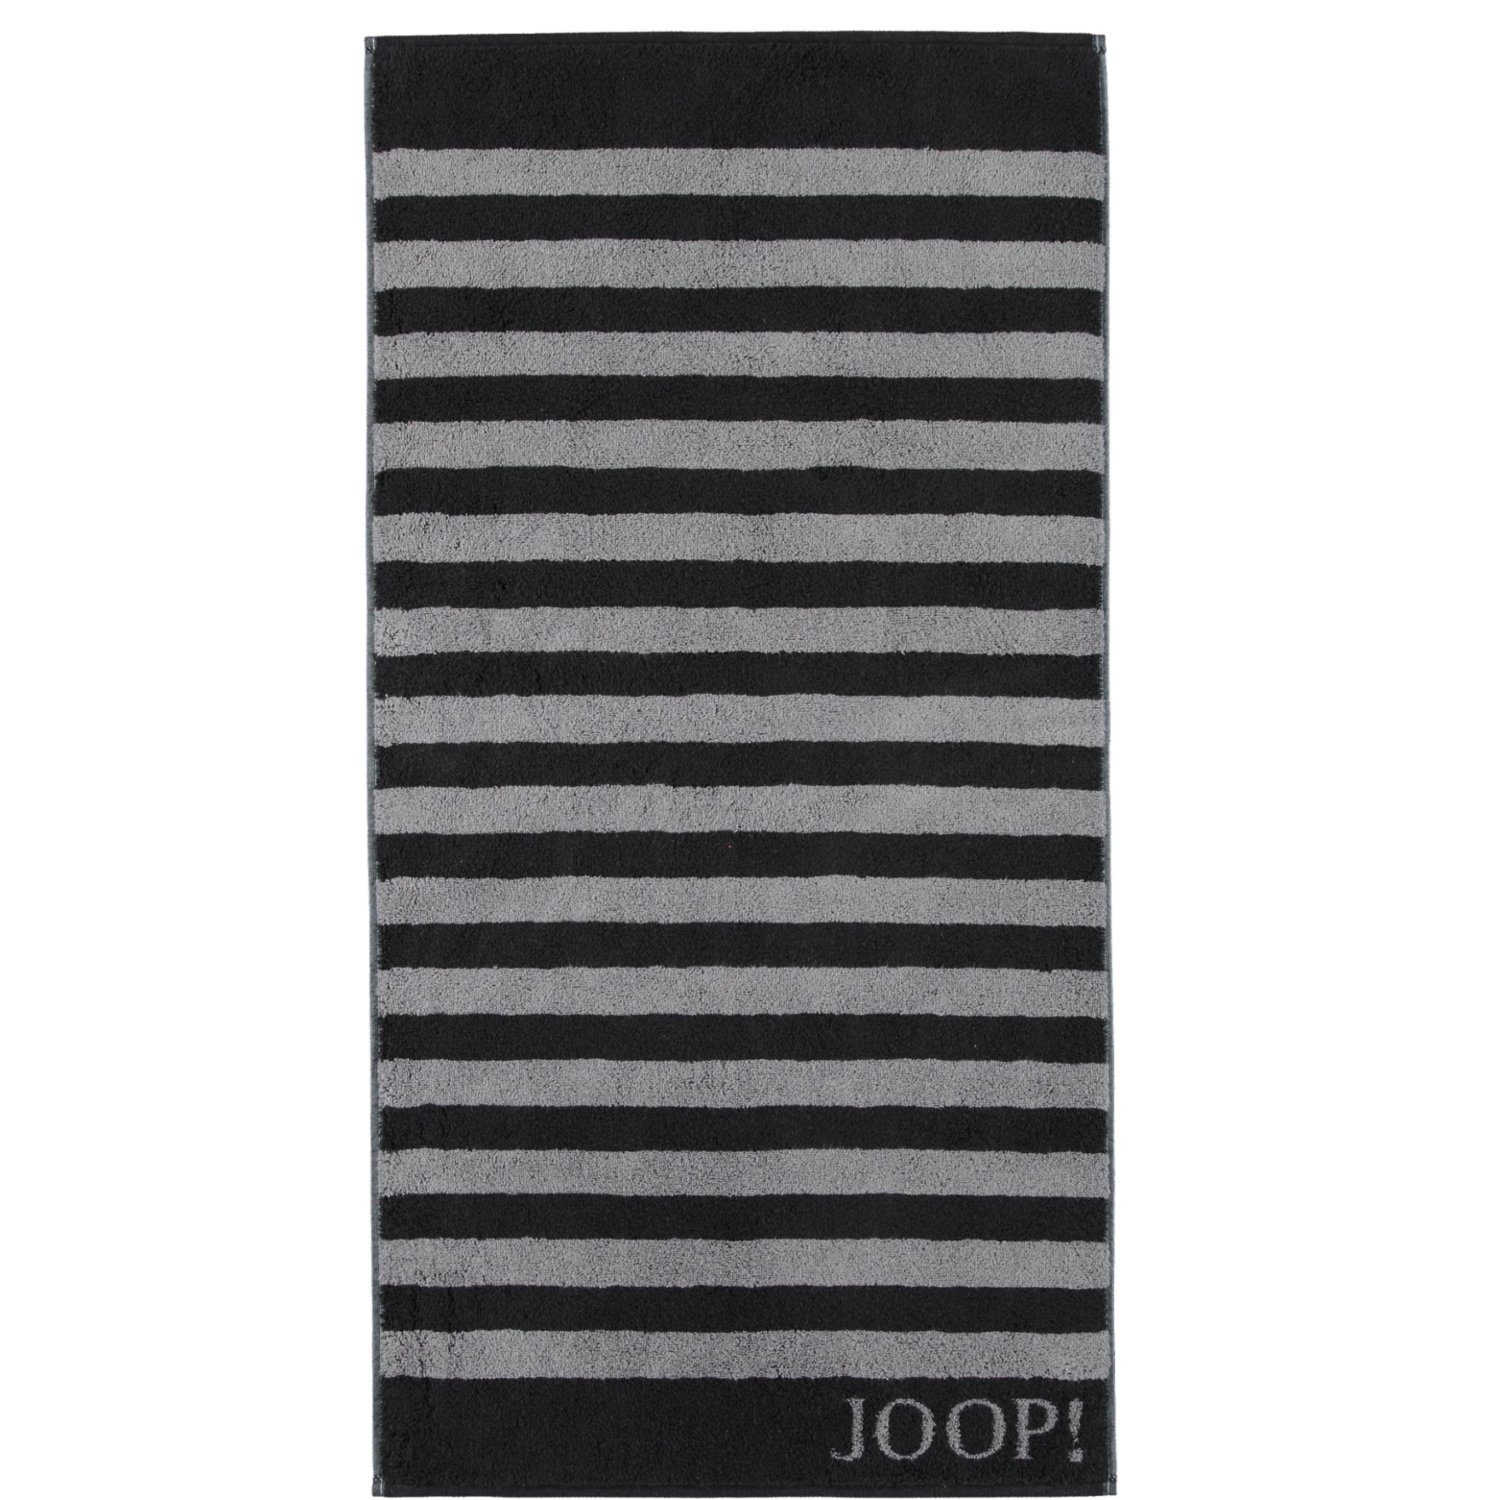 JOOP! Saunatuch Classic Stripes 1610, 100% Baumwolle